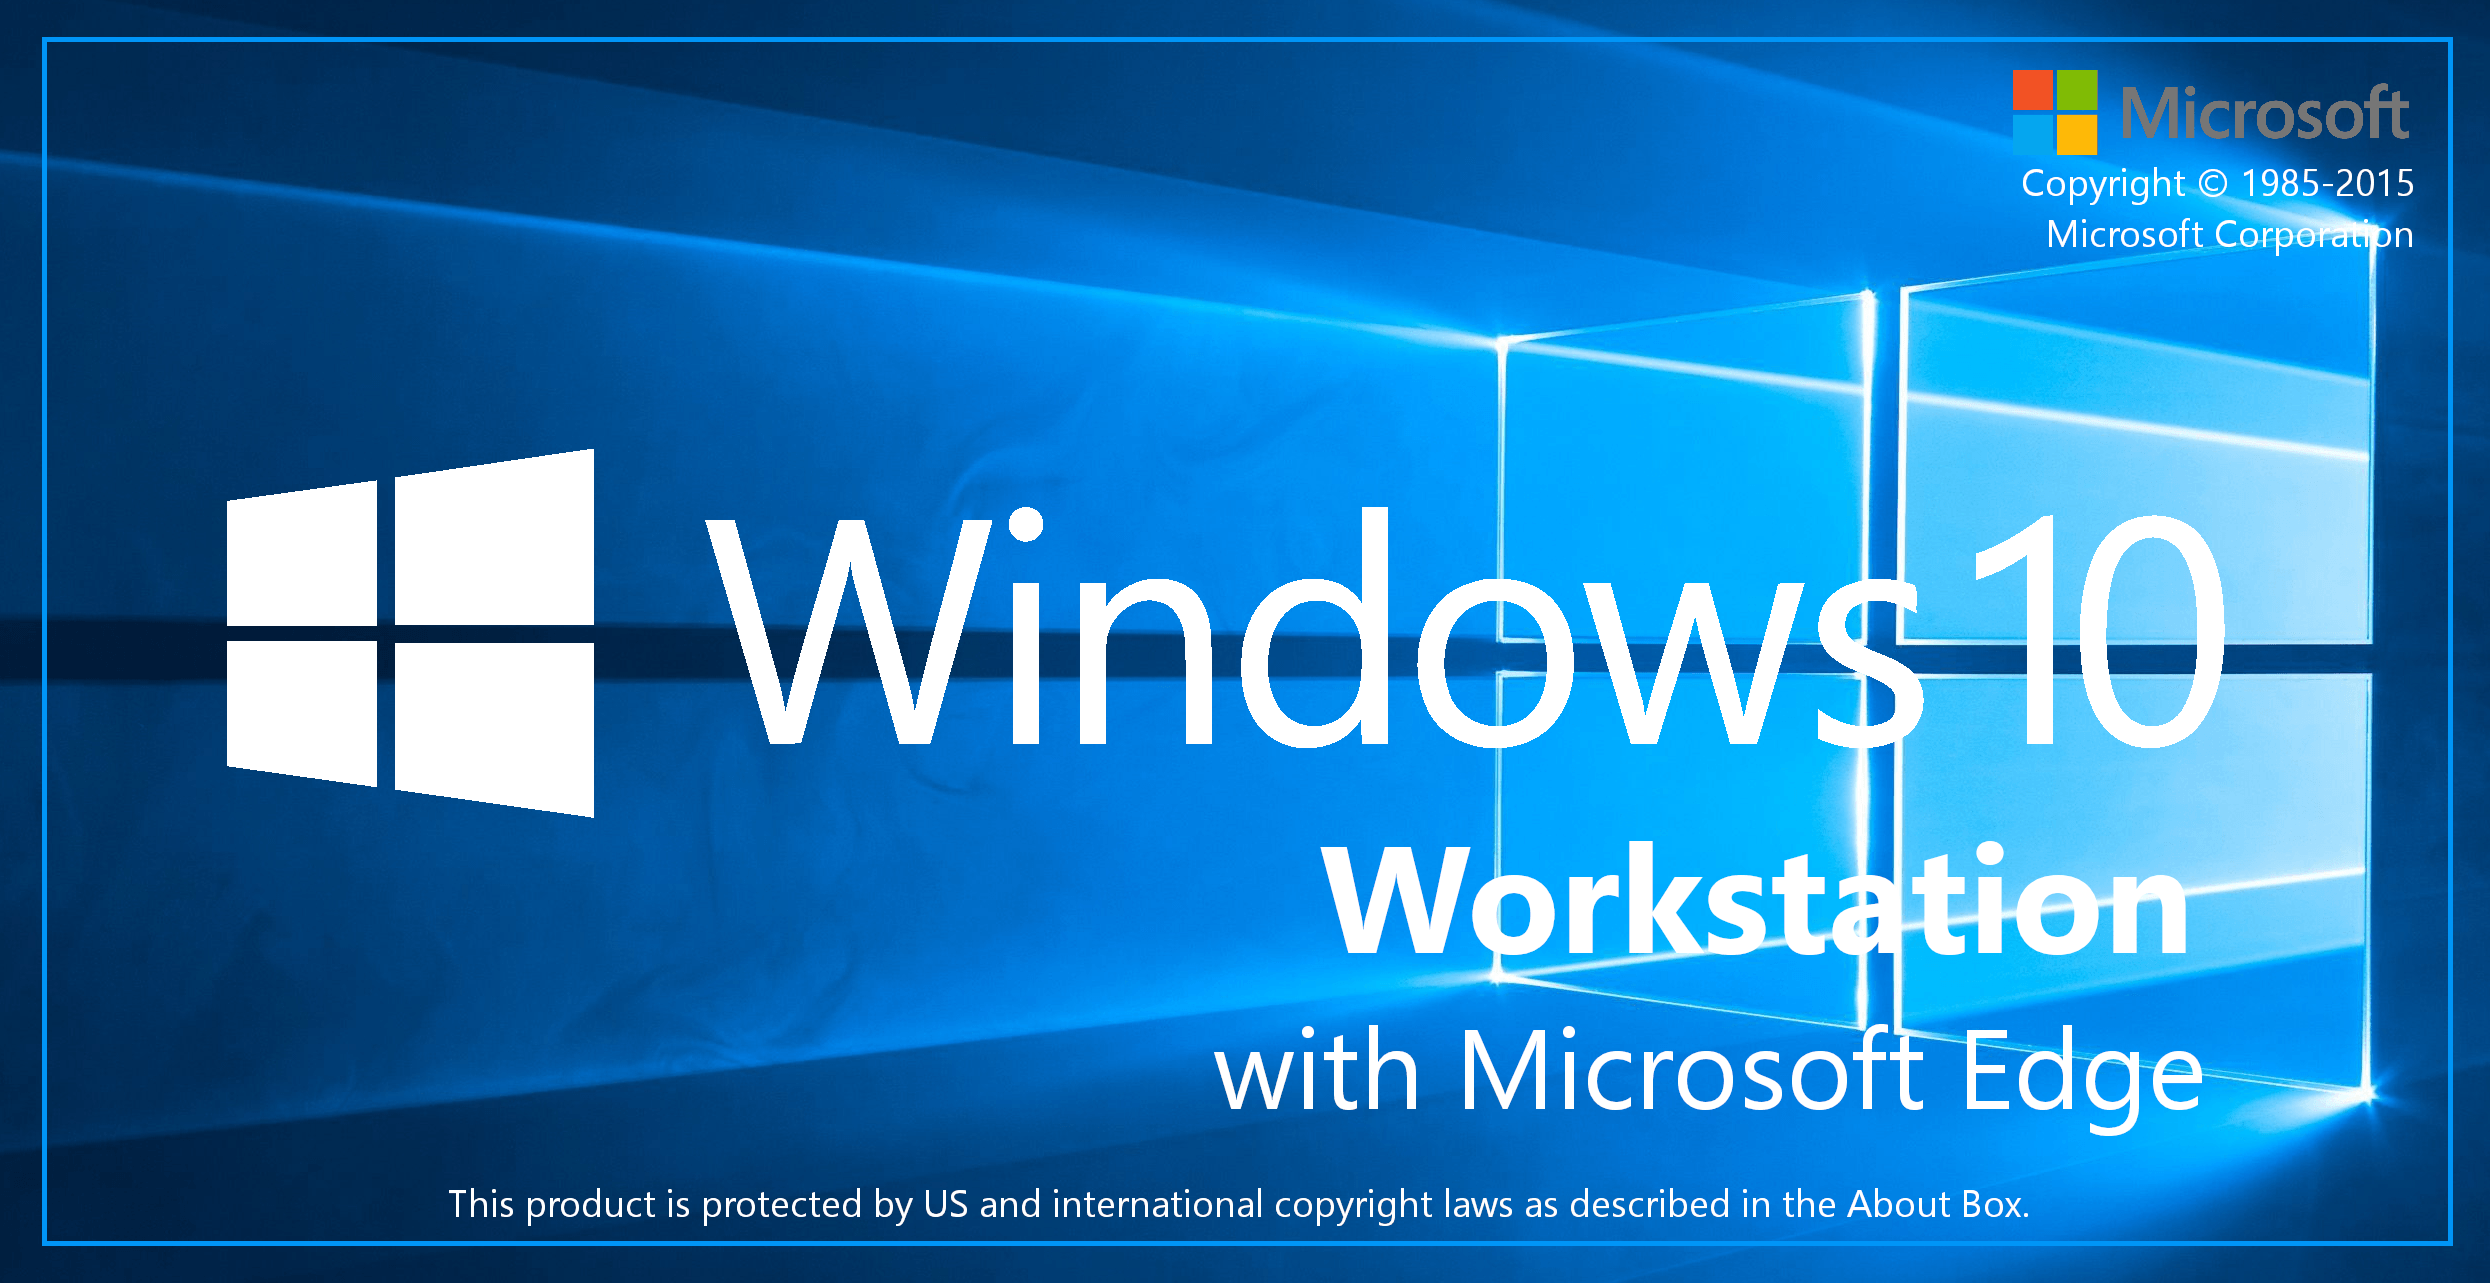 Windows NT 4.0 Logo - I made this Windows NT 4.0 Workstation wallpaper remake of Windows